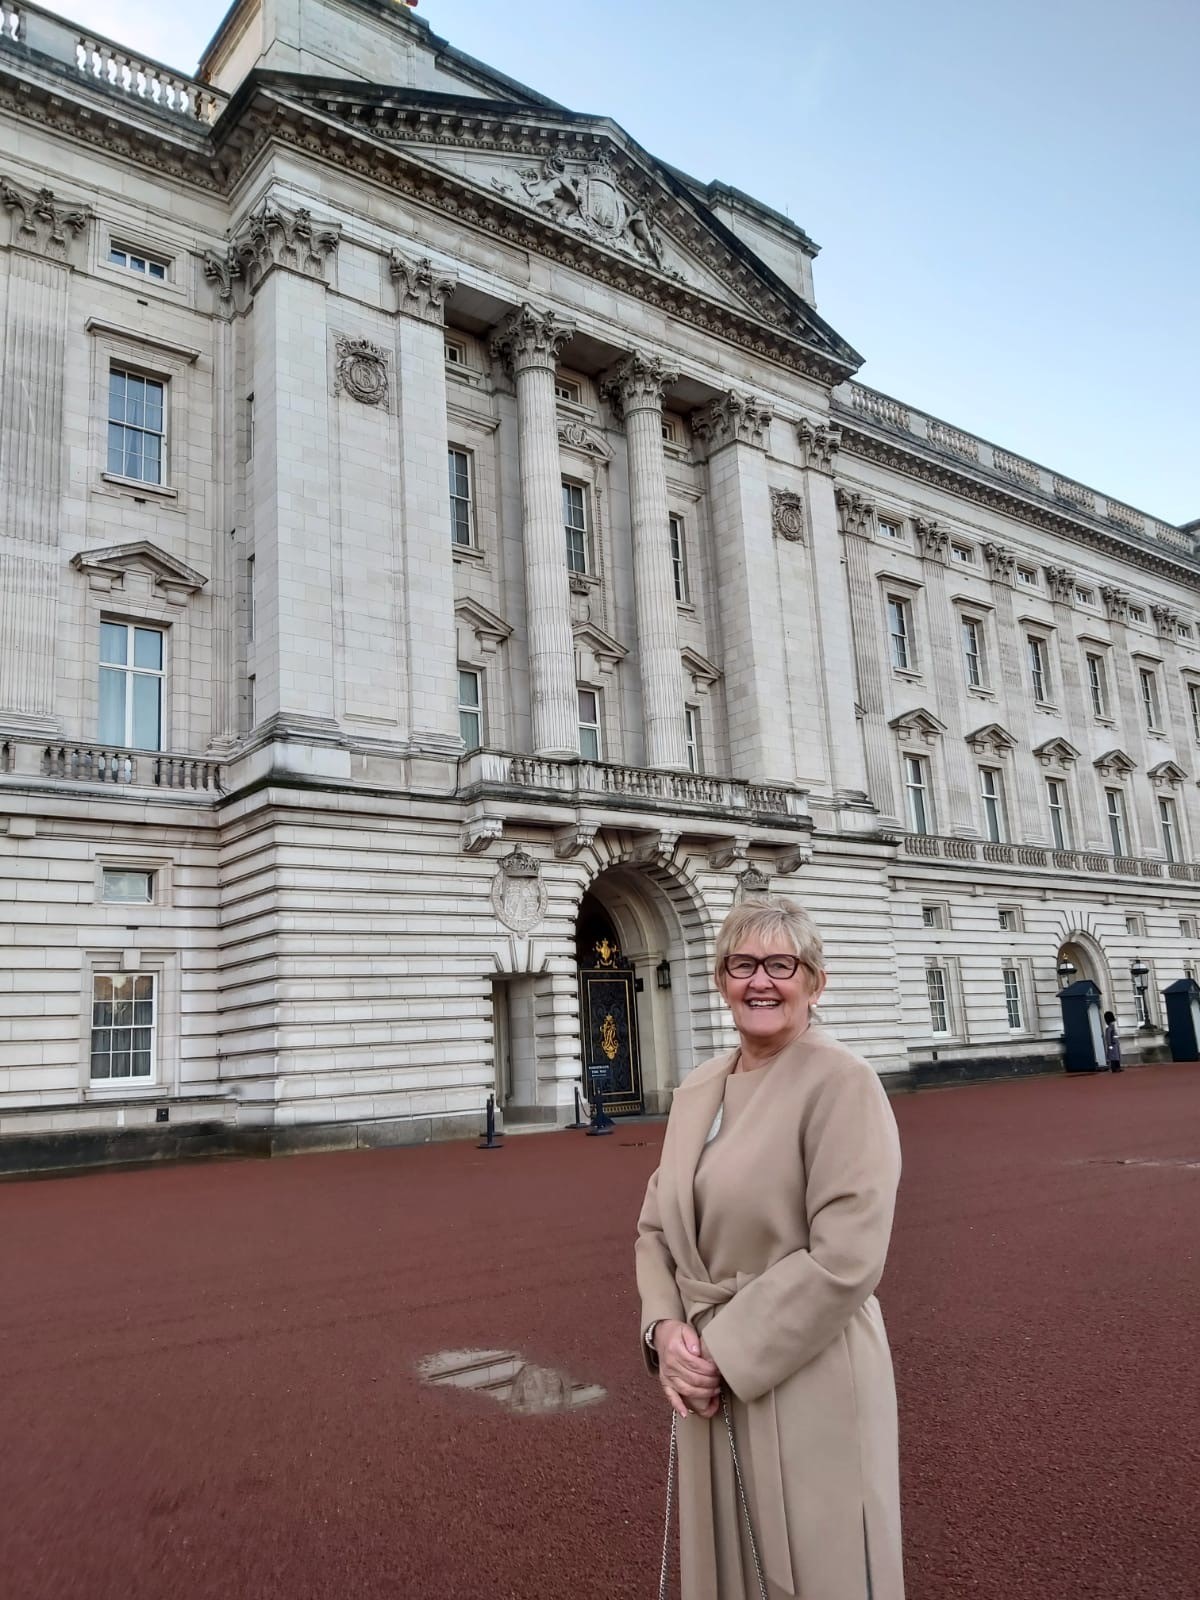 Paula at Buckingham Palace